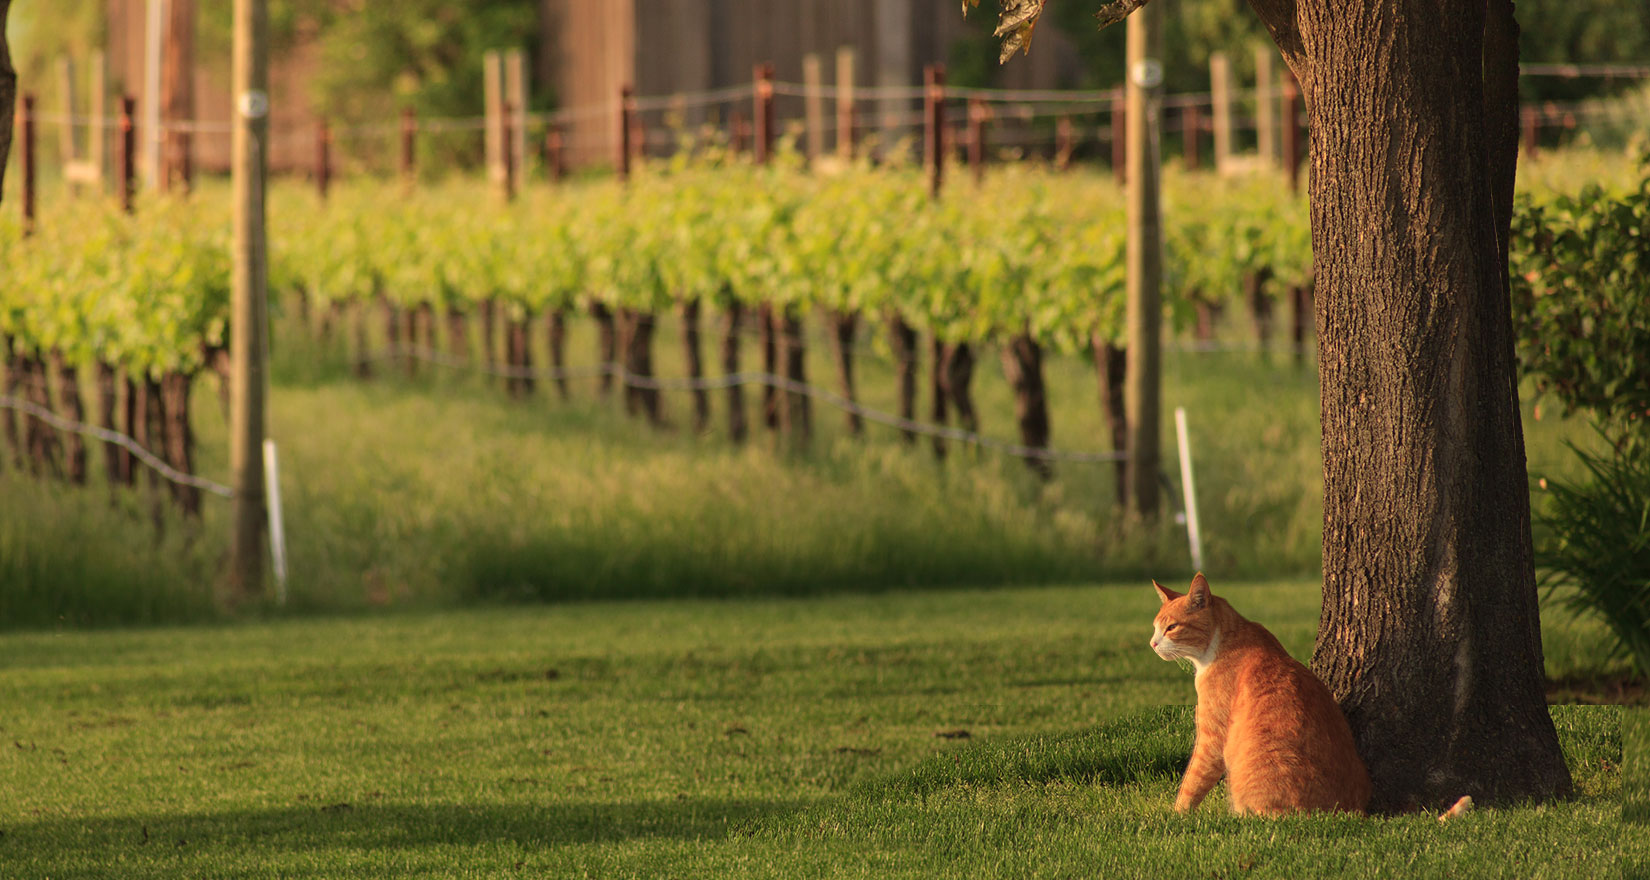 Cat in vineyard